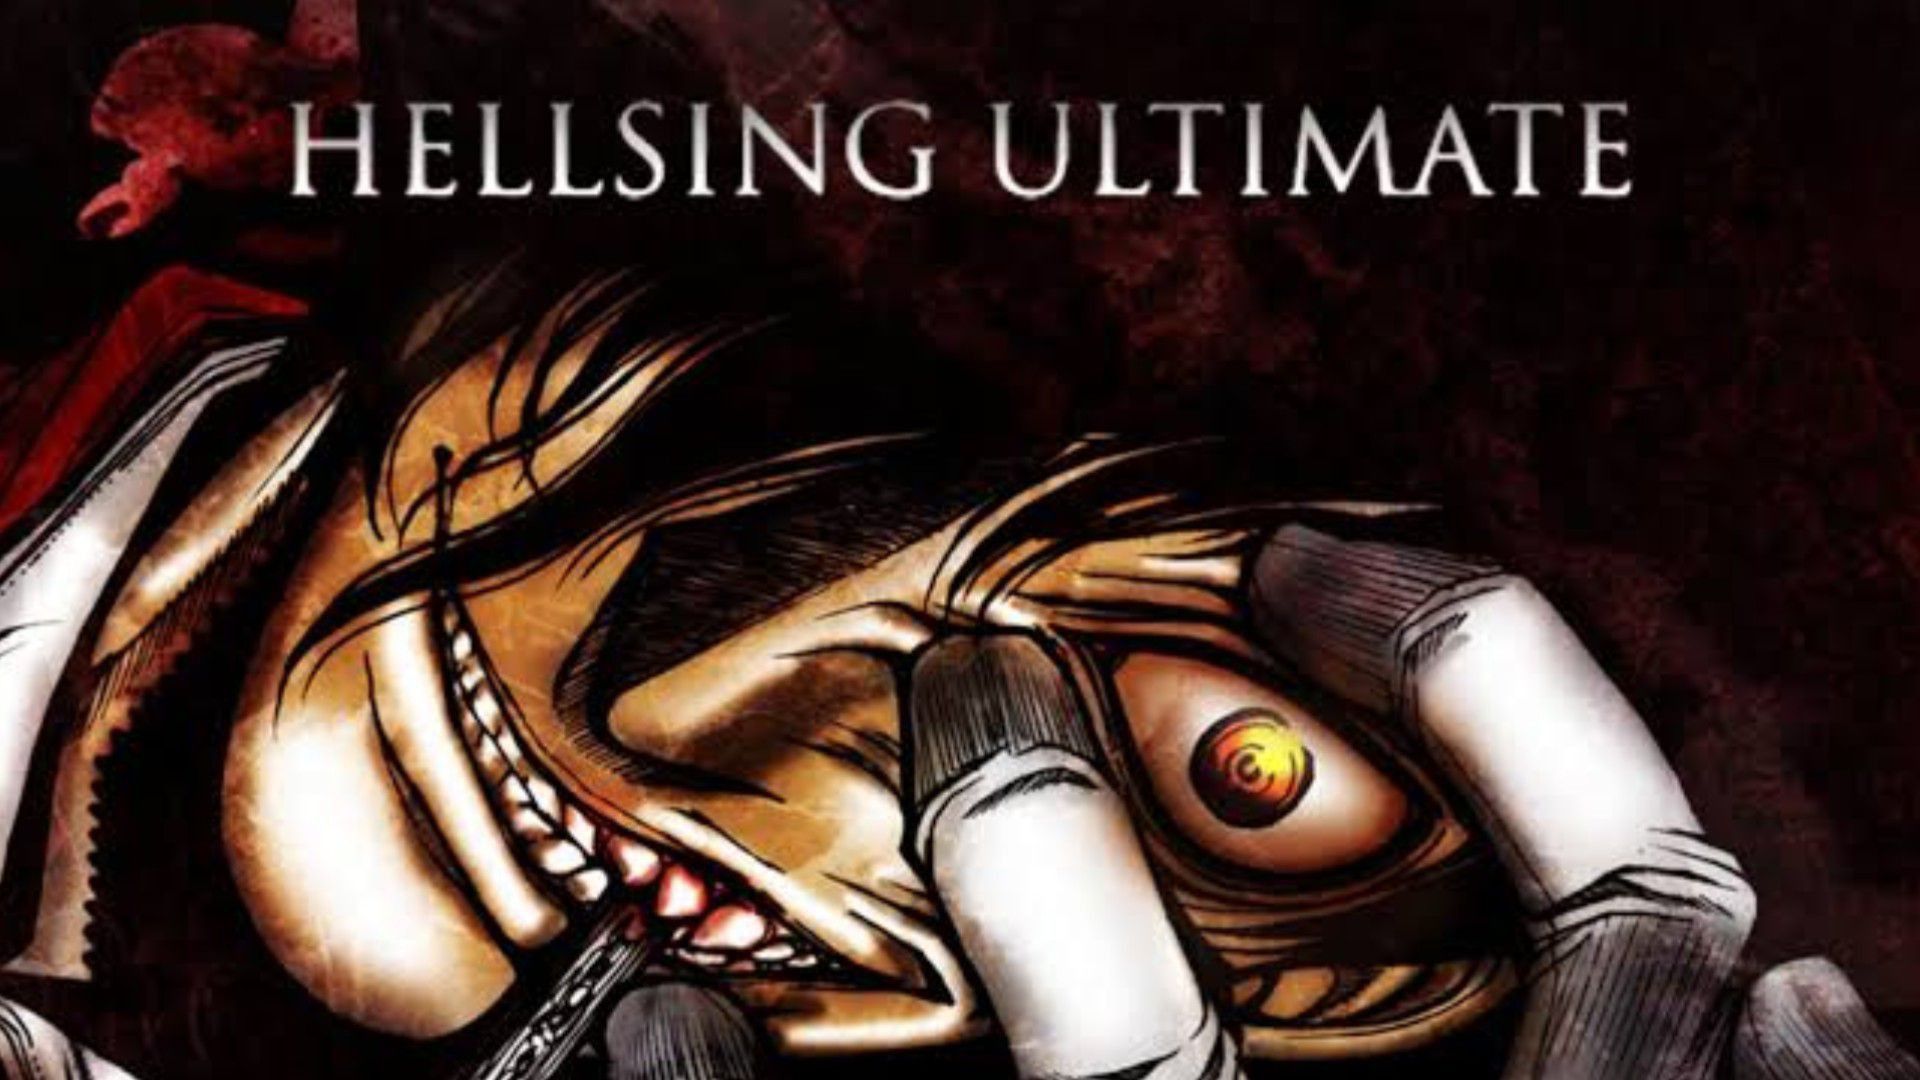 Assistir Hellsing Ultimate Episódio 10 Legendado (HD) - Meus